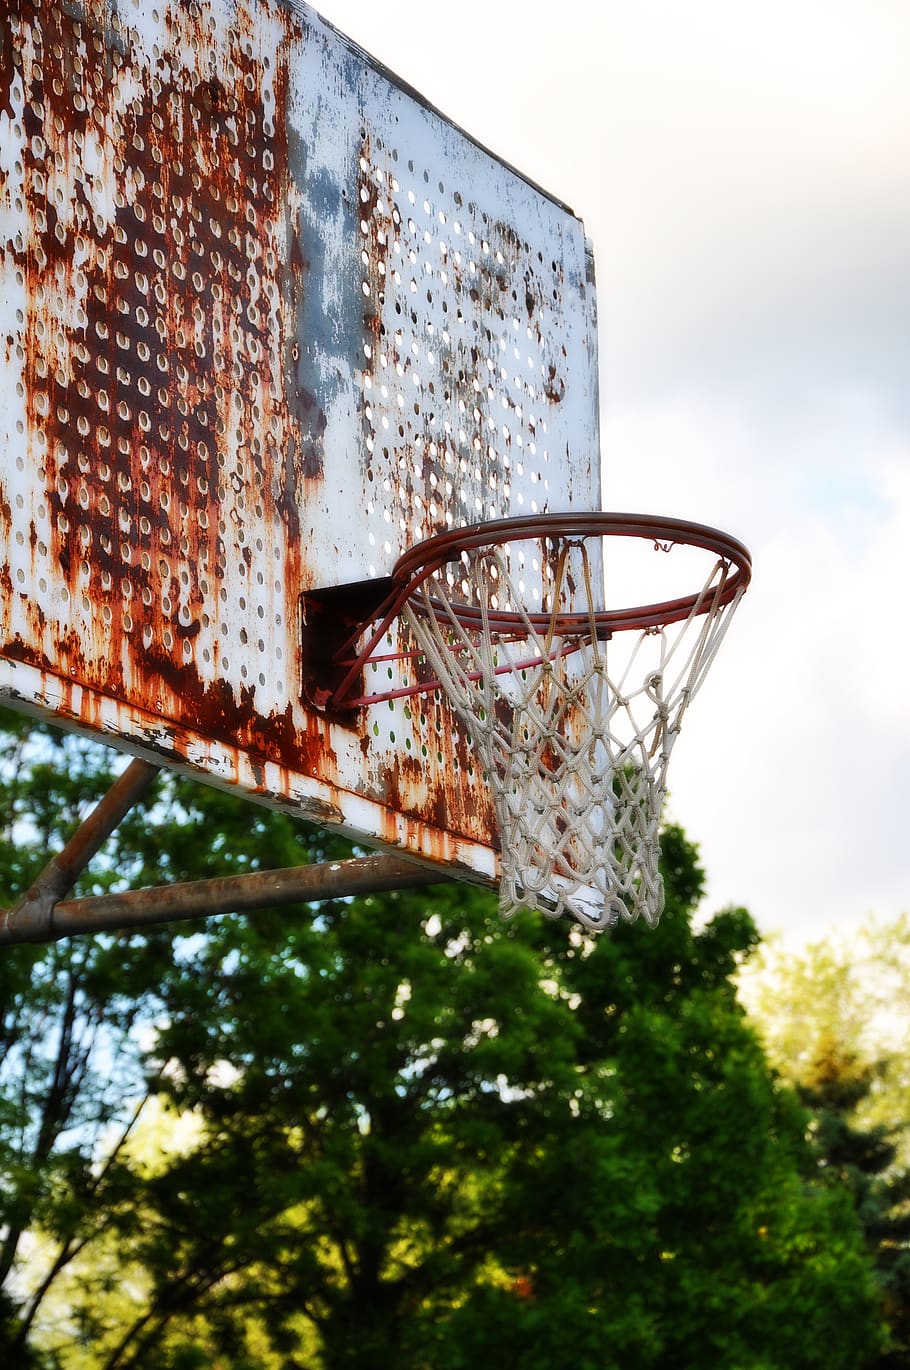 basketball, hoop, urban decay, net, decayed, urban, deteriorated, backboard, basket, basketball - sport